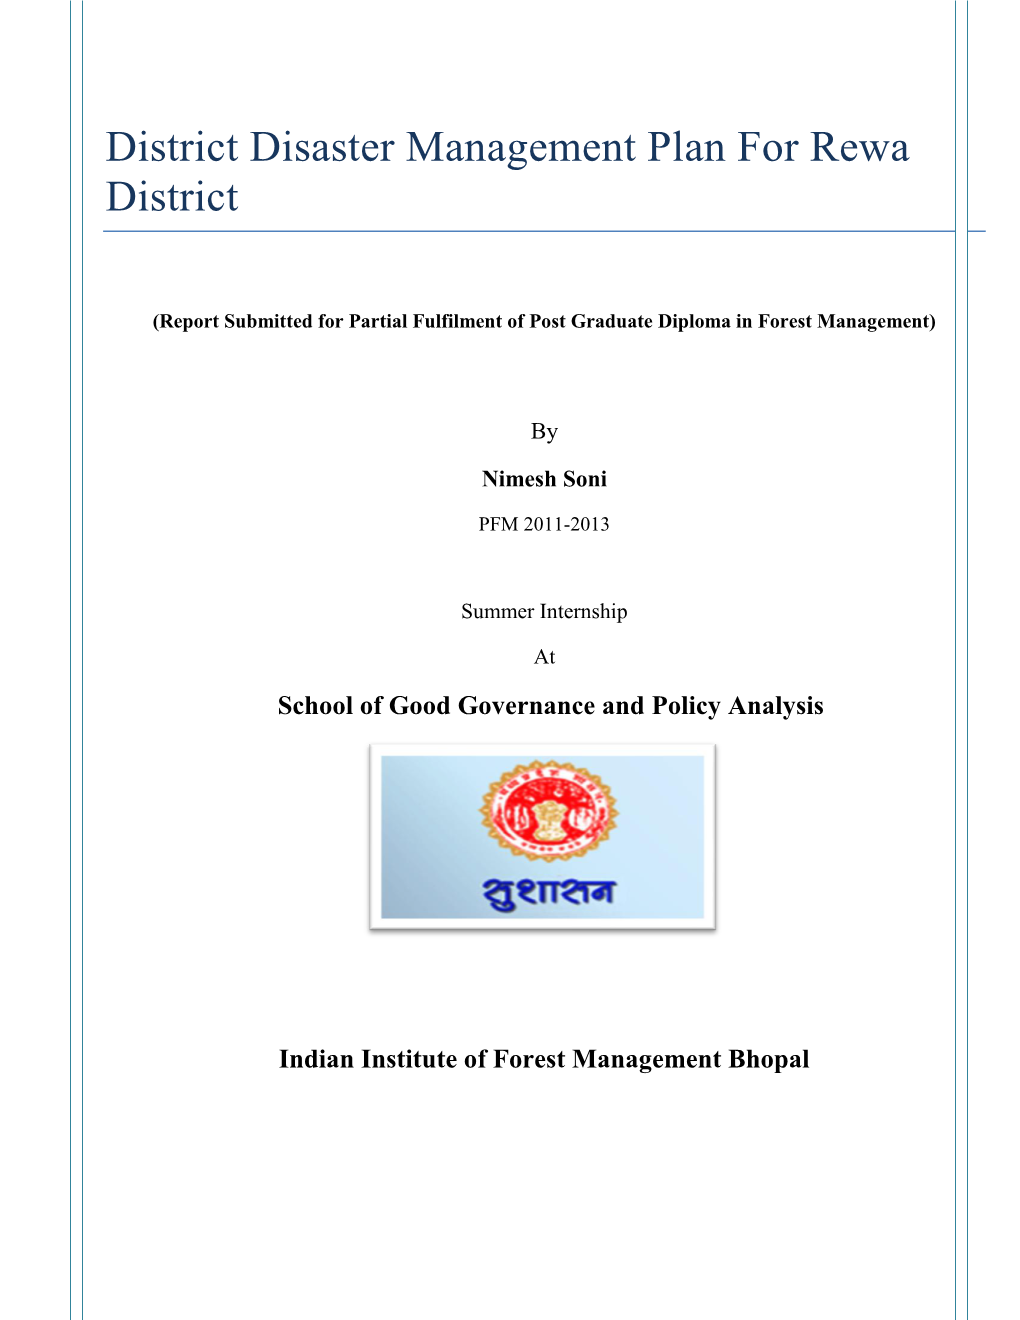 District Disaster Management Plan for Rewa District